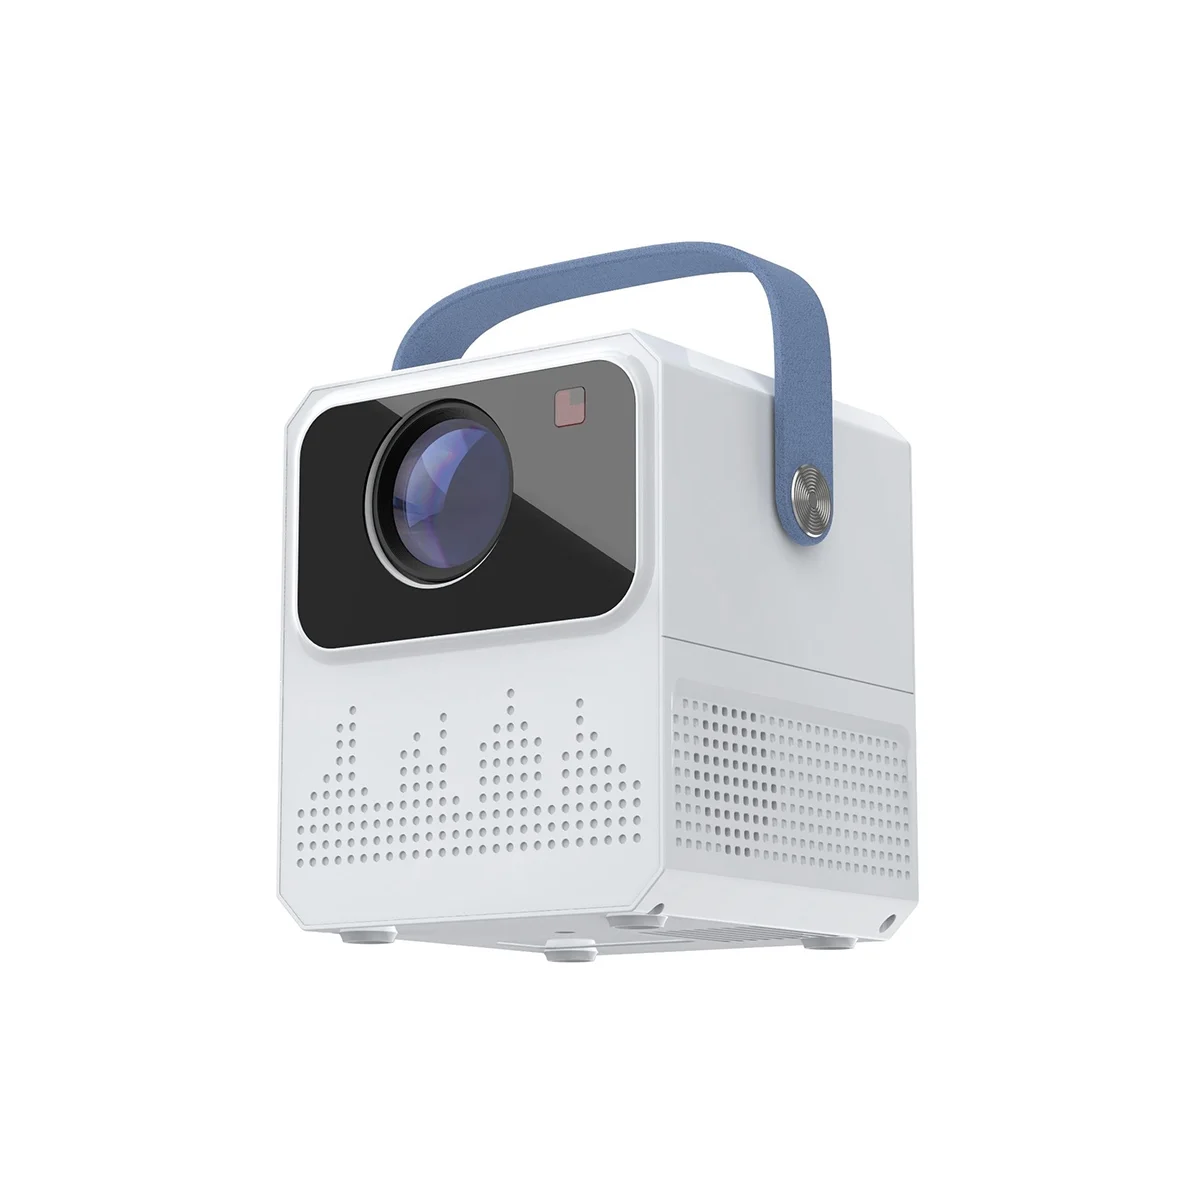 

Mini WIFI Projector 4K HD Home Theater Media Player Auto-Focus Projector Outdoor Portable Smart Projector EU Plug